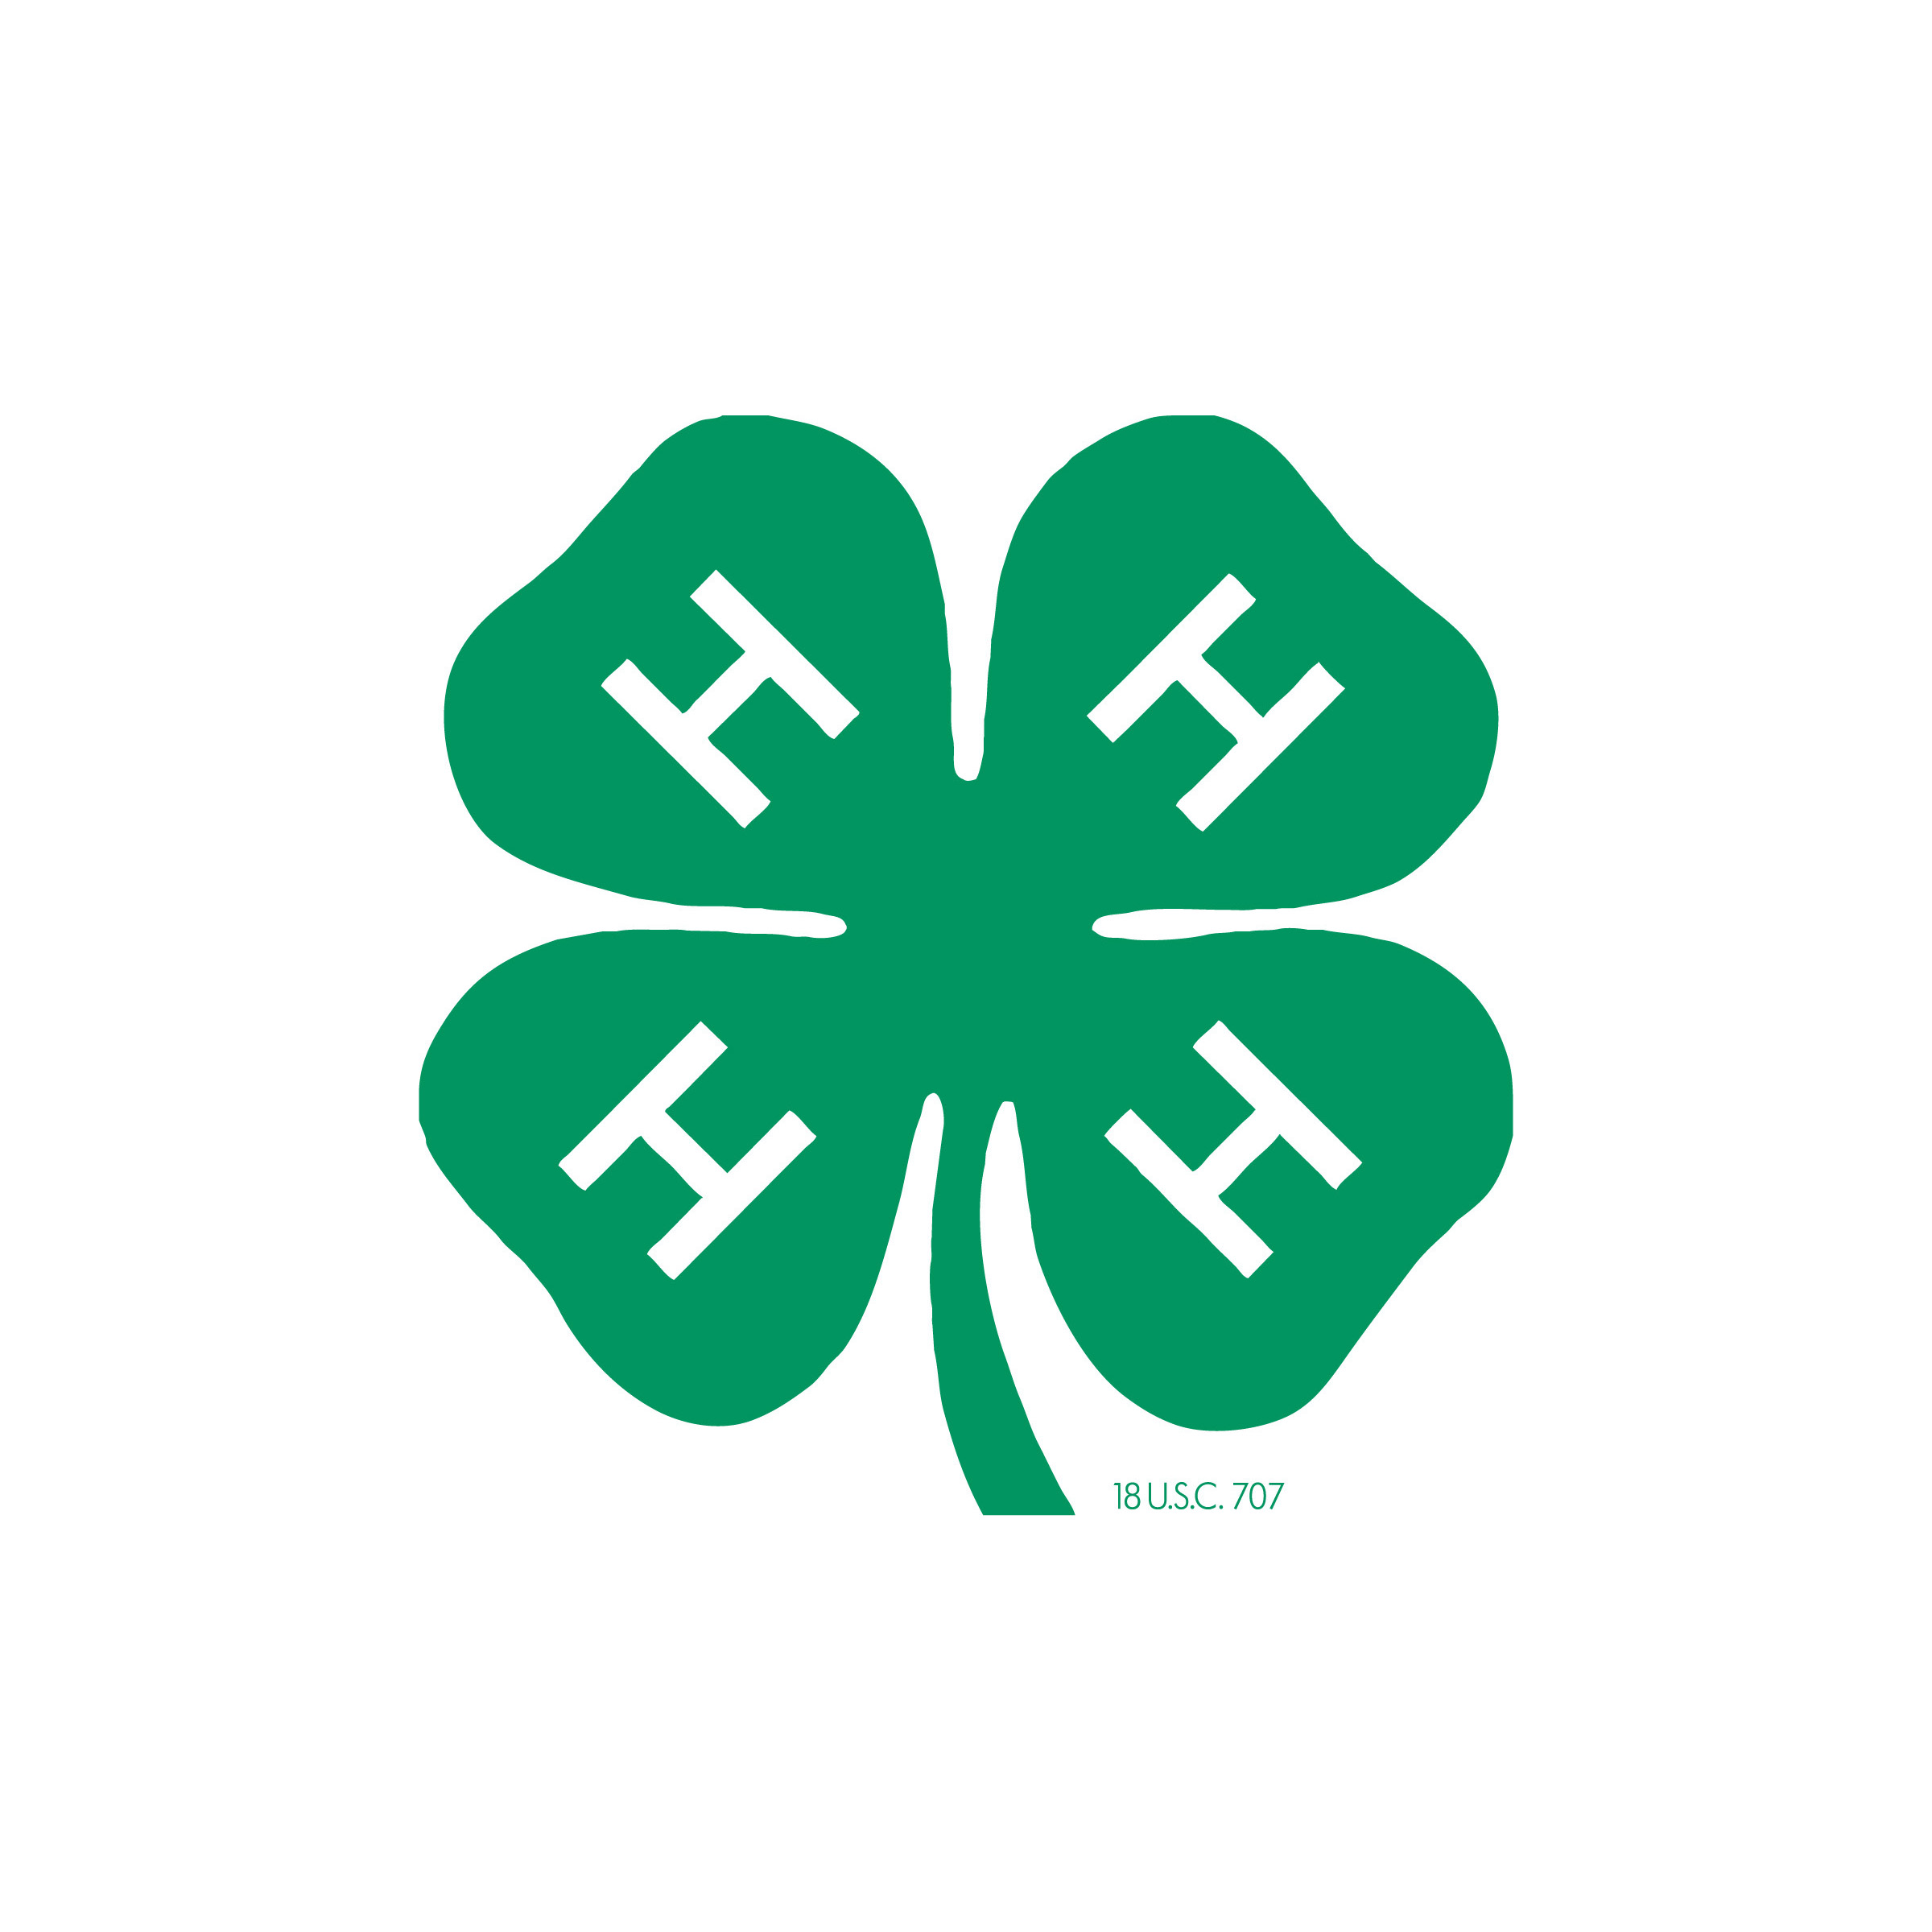 The official 4-H emblem is a 